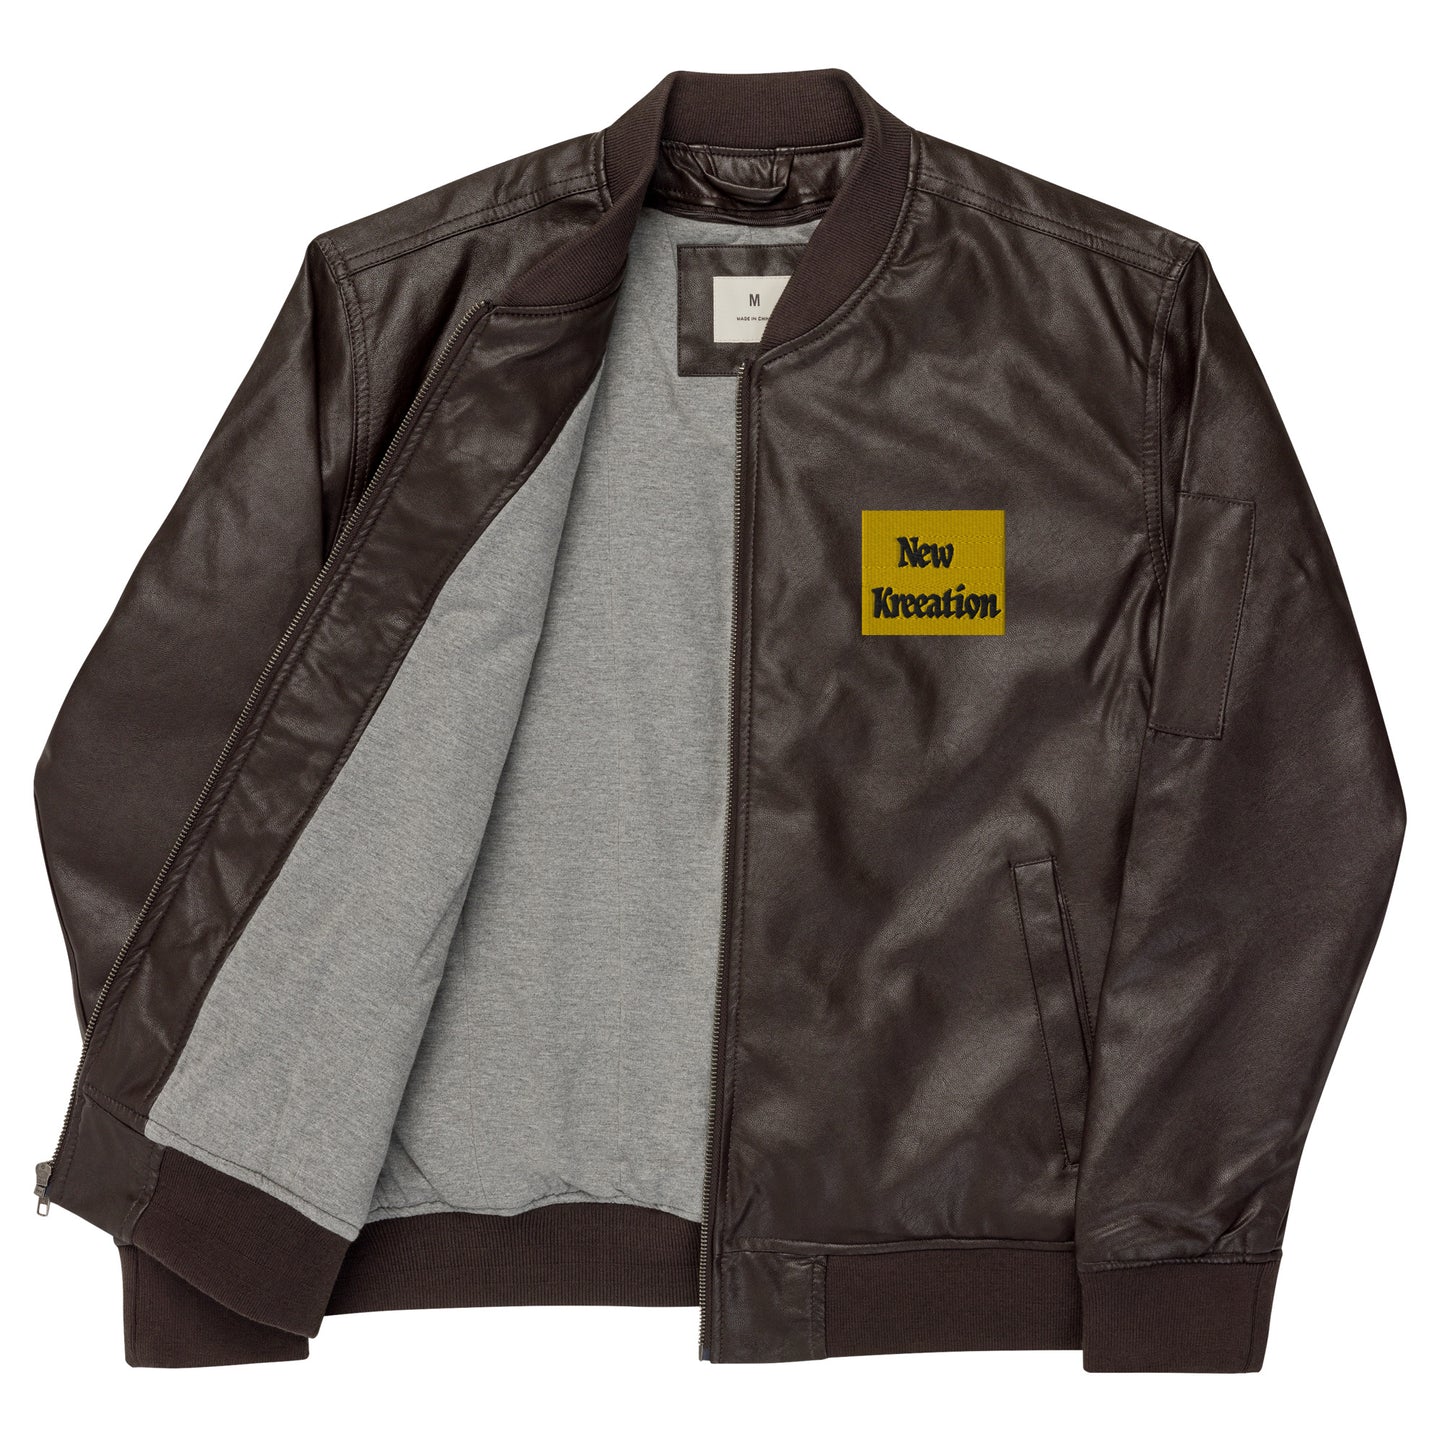 New Kreeation Leather Bomber Jacket